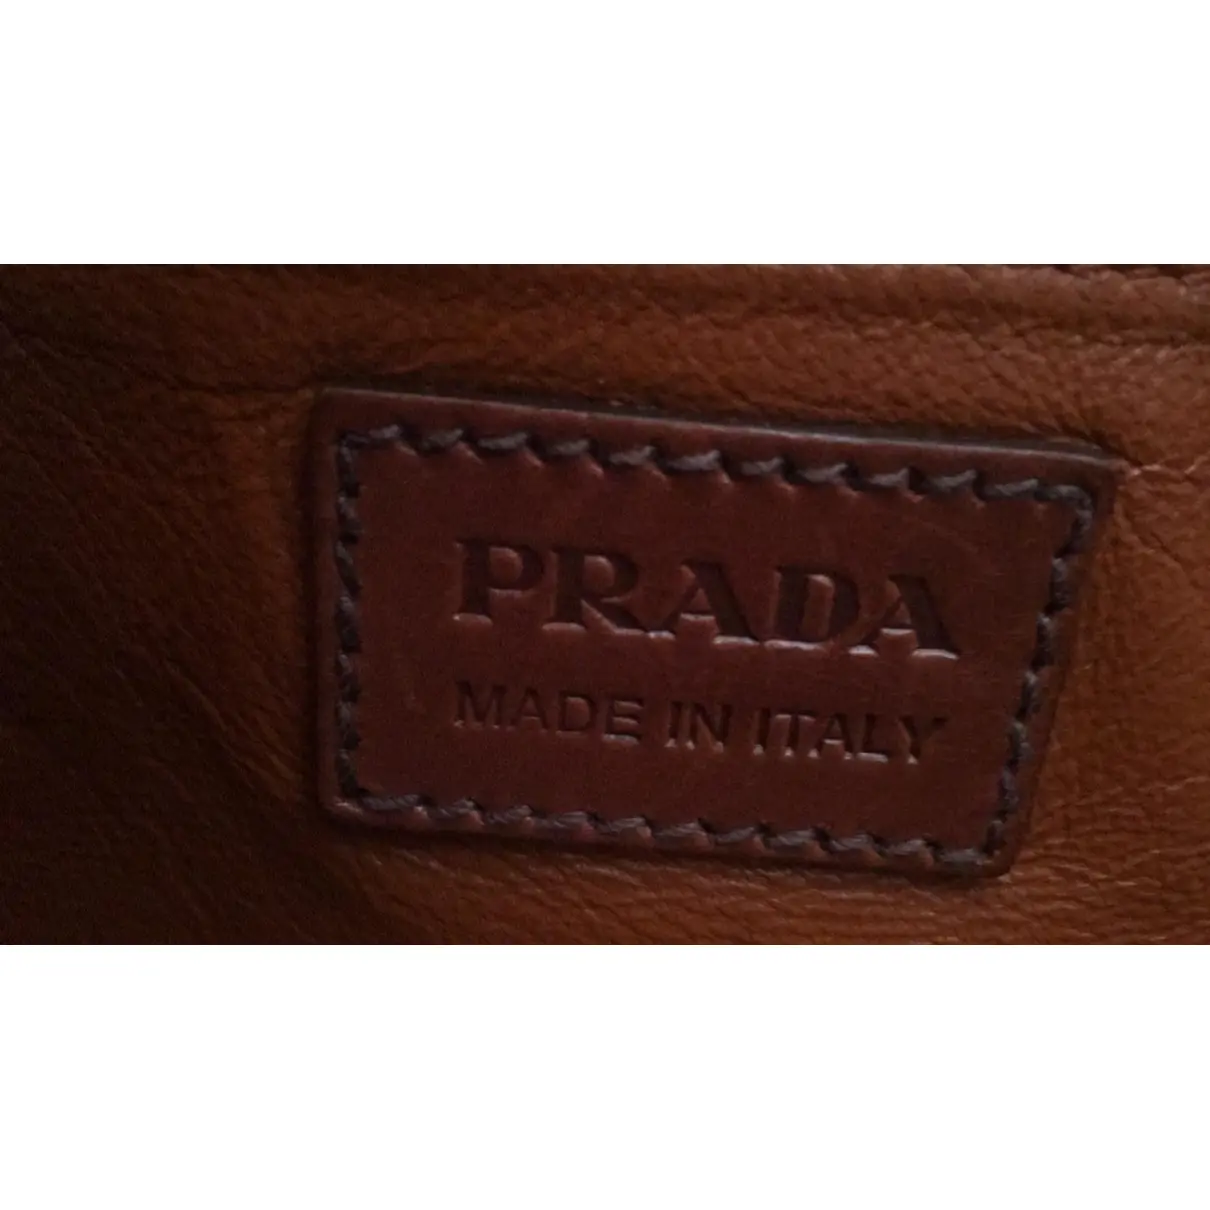 Bowling handbag Prada